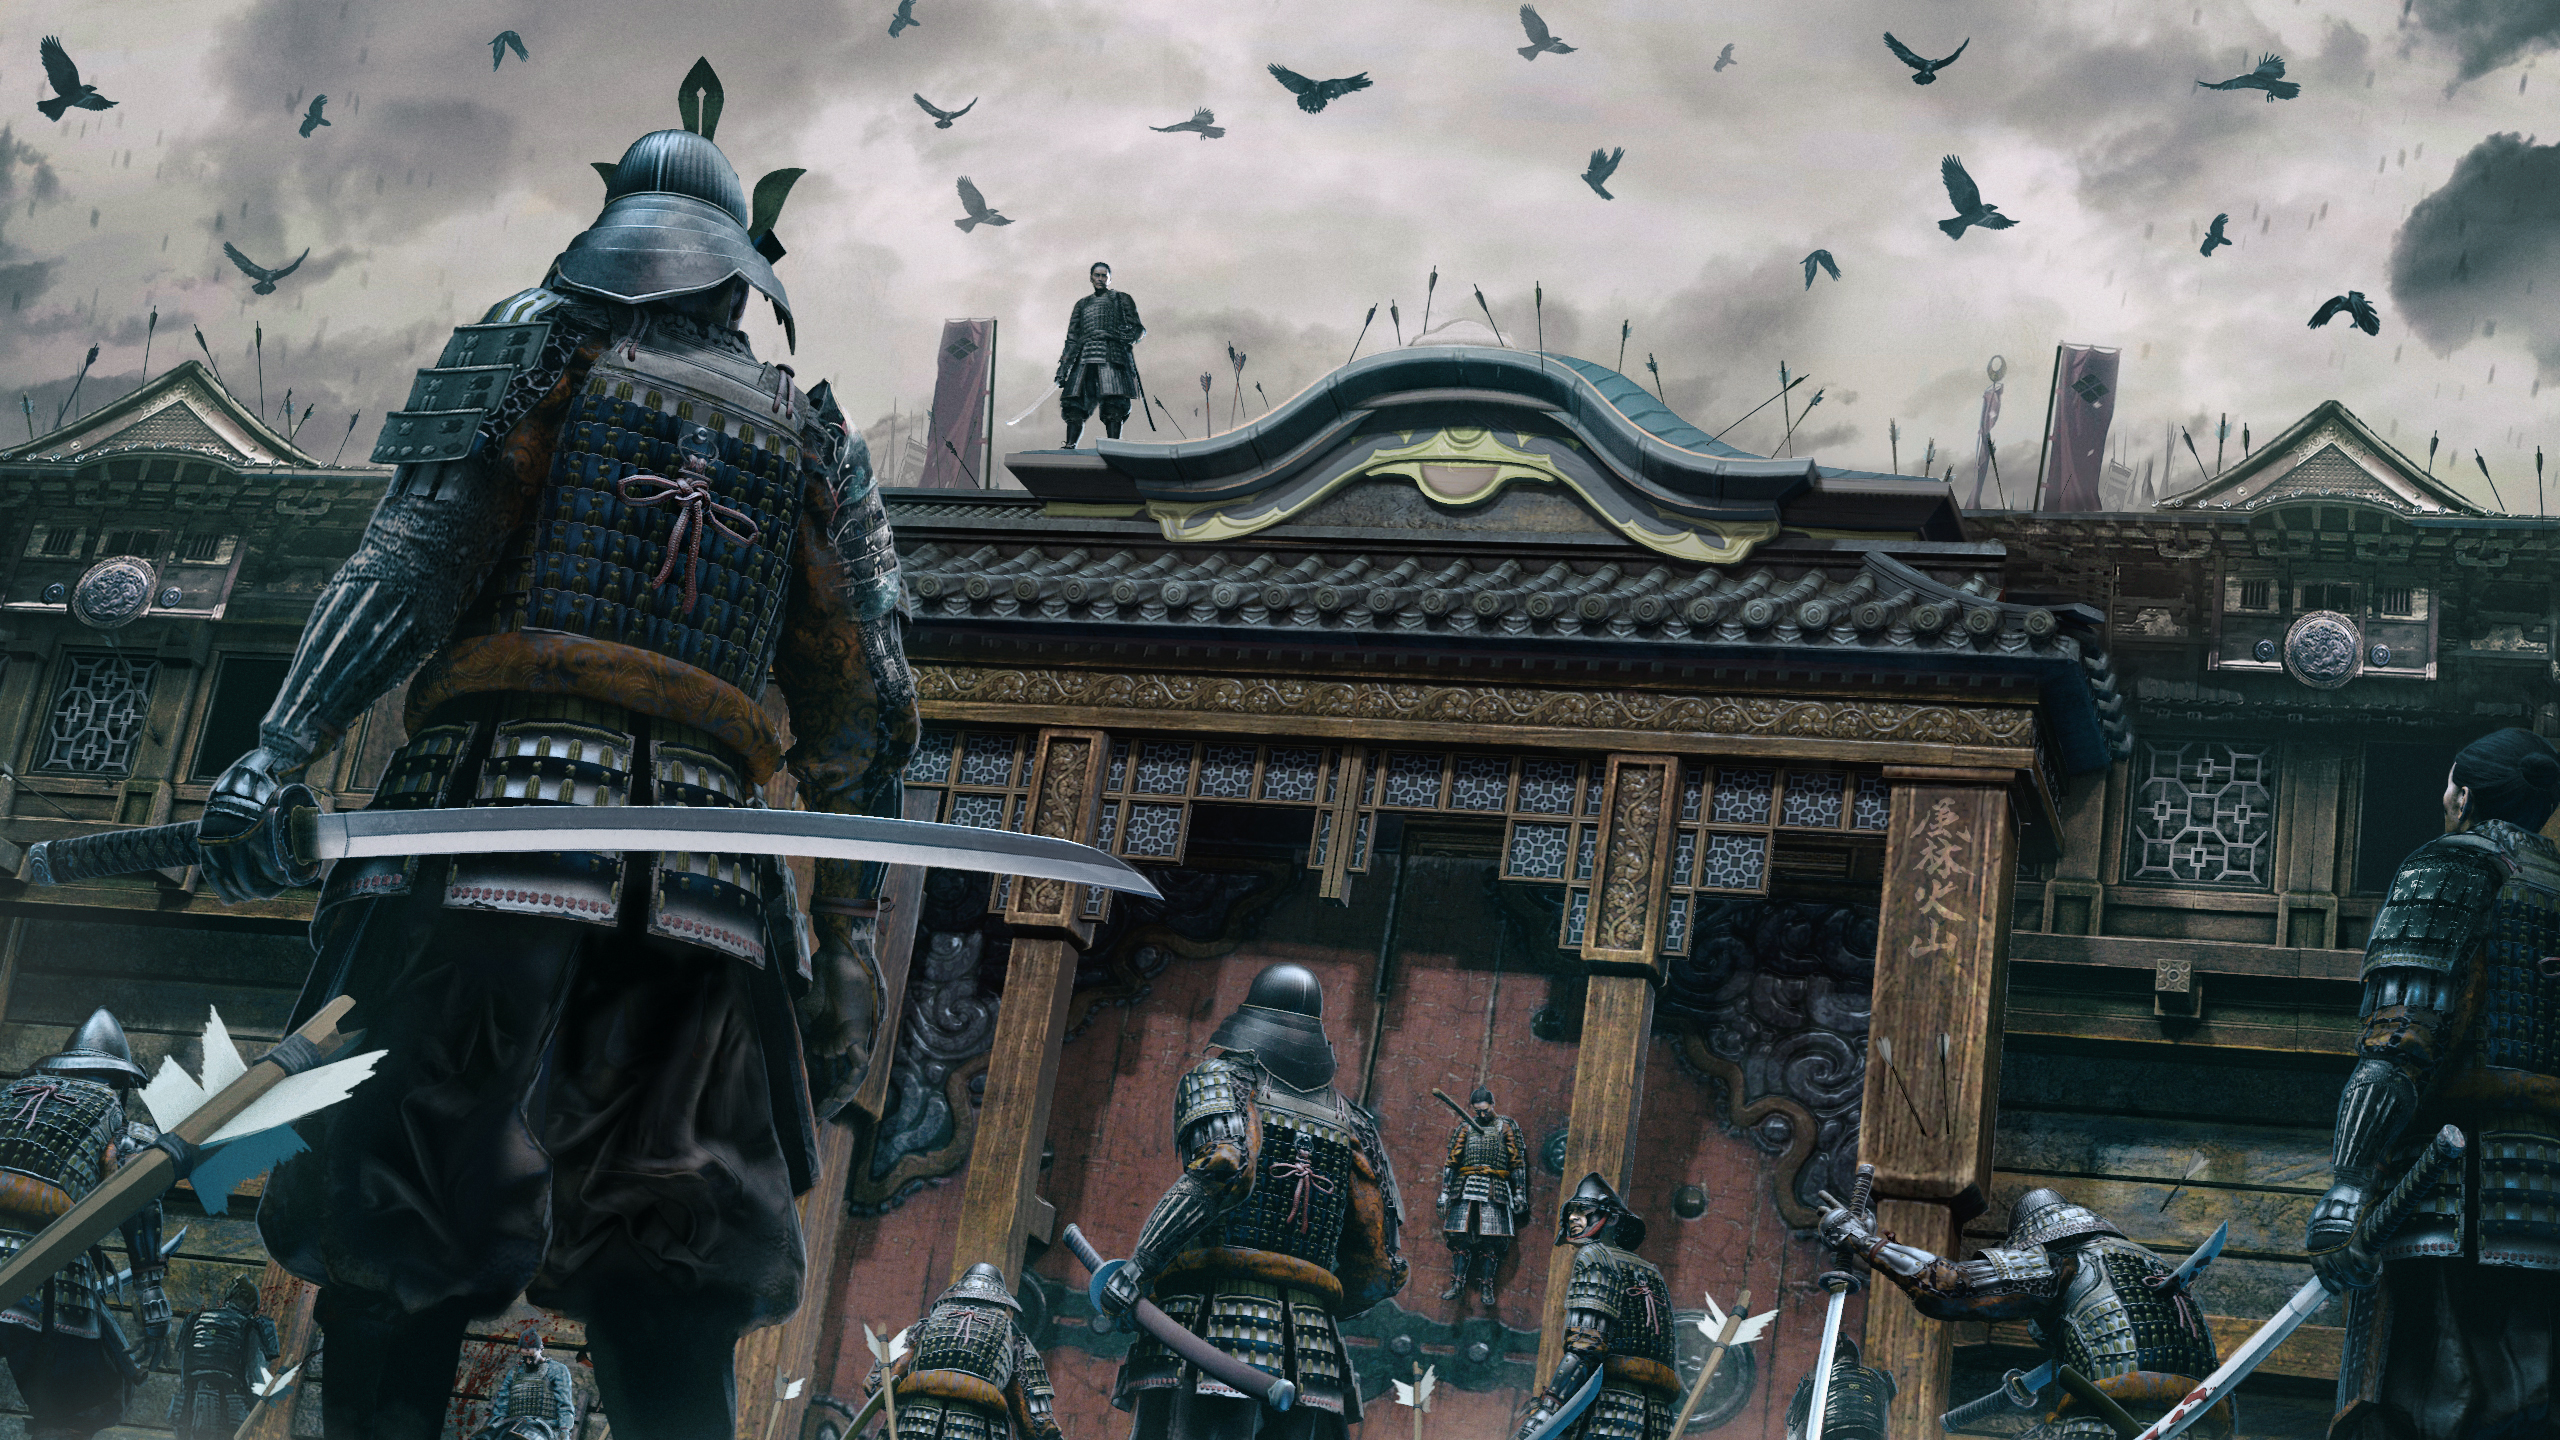 Samurai Siege by Daniel Mindibaev